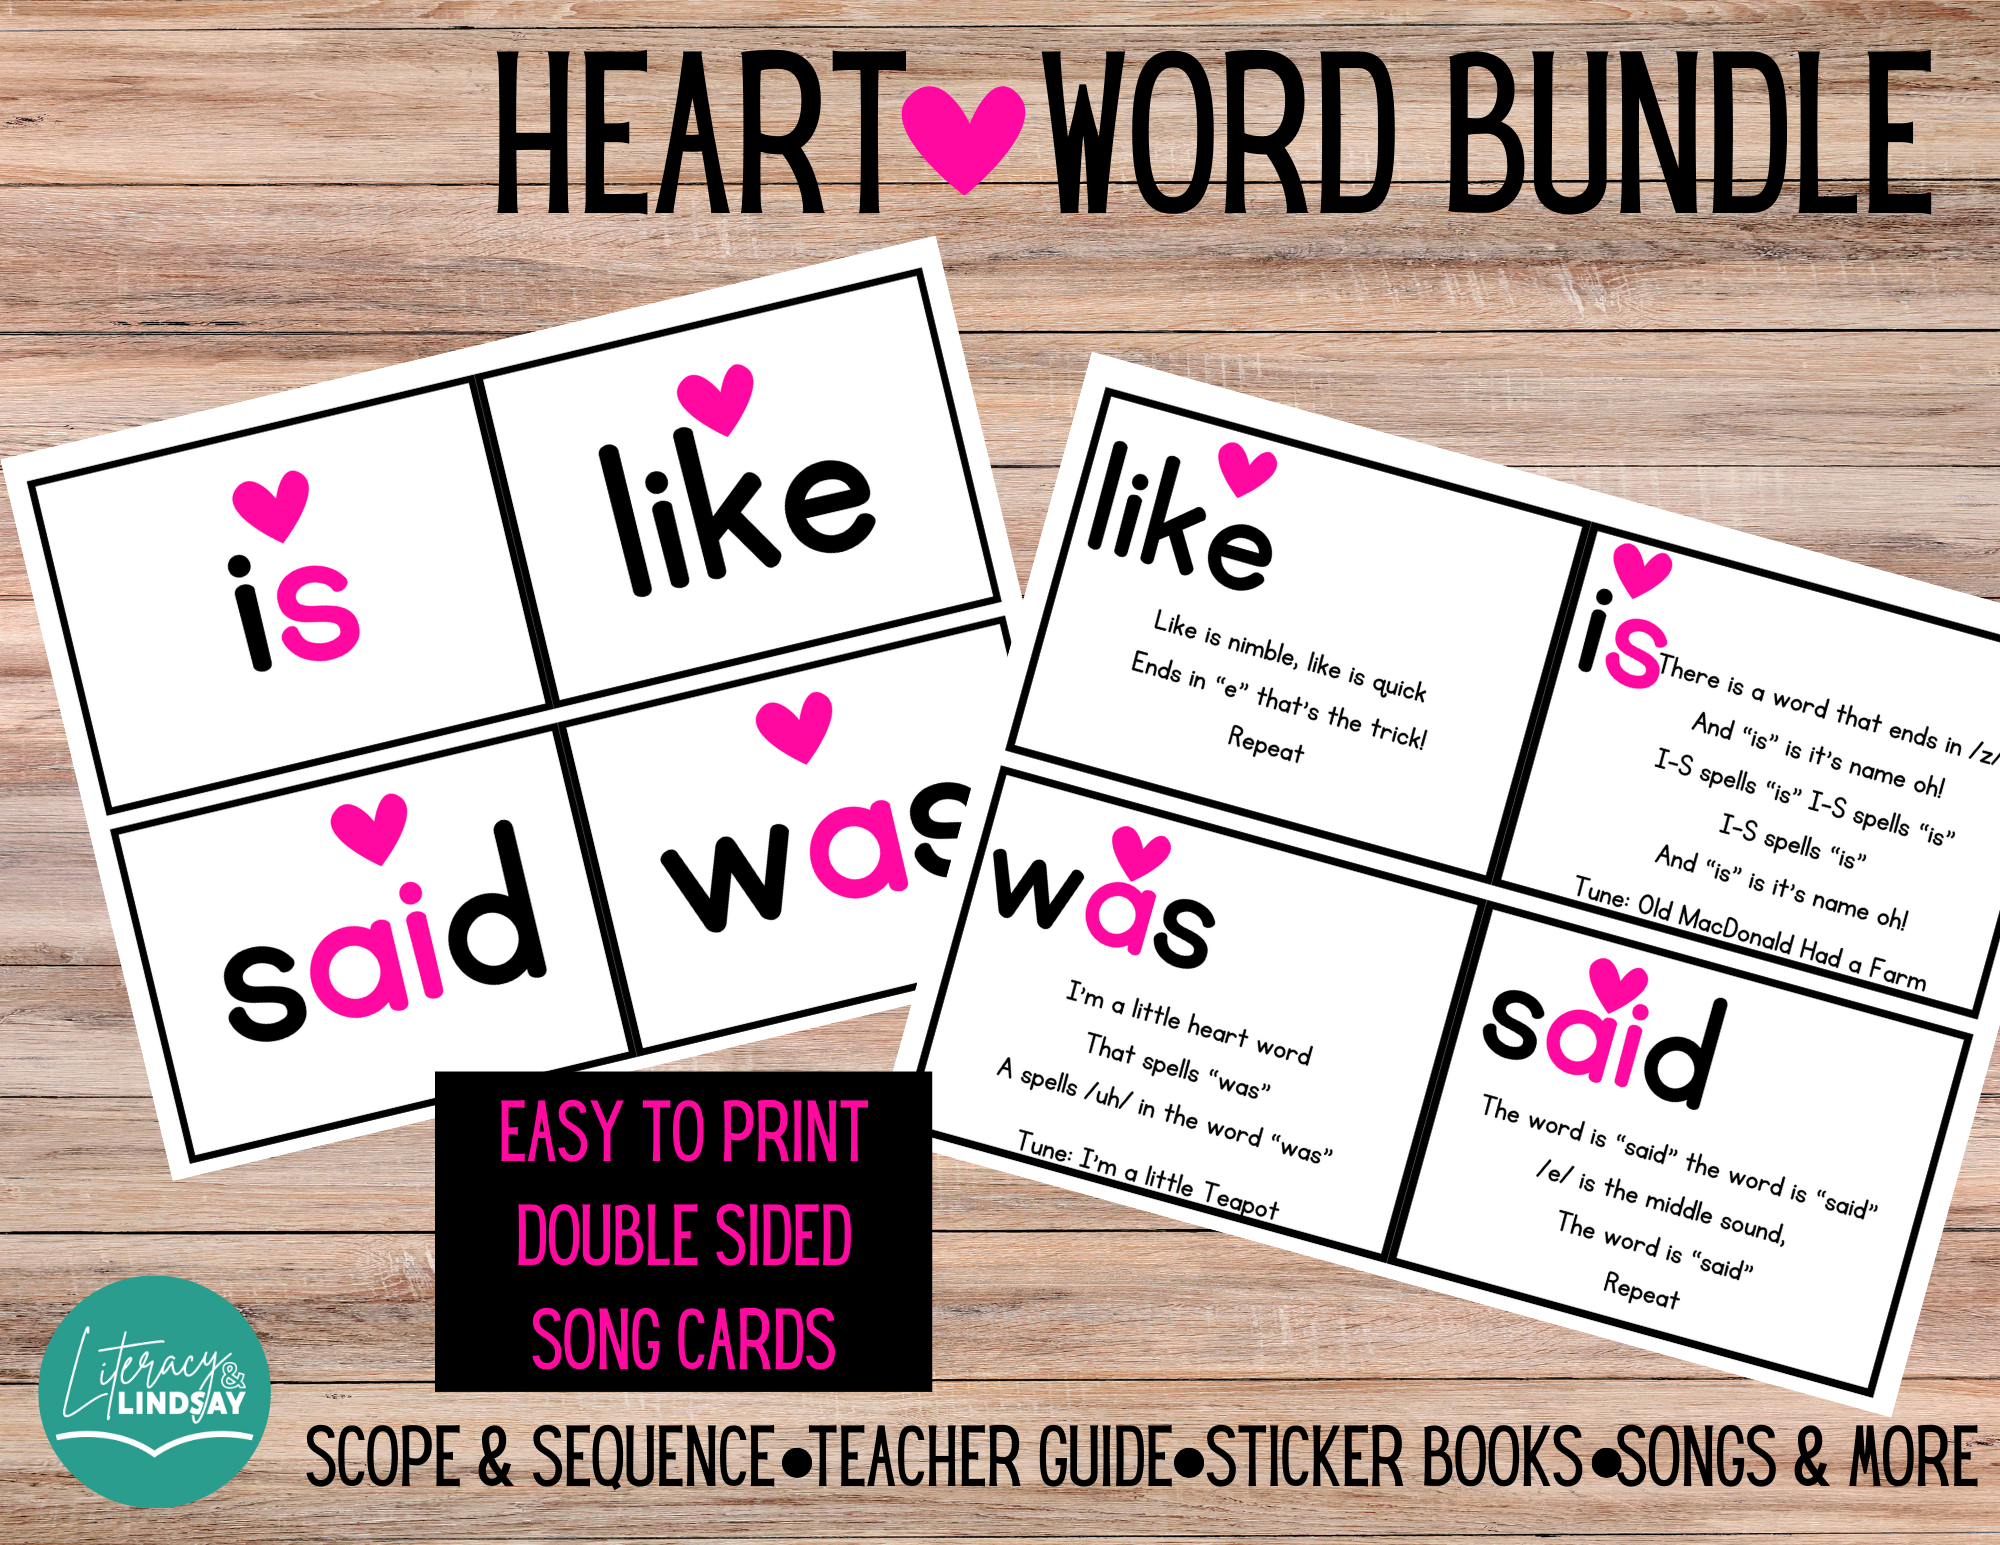 Heart Word Bundle - Songs to teach Heart Words